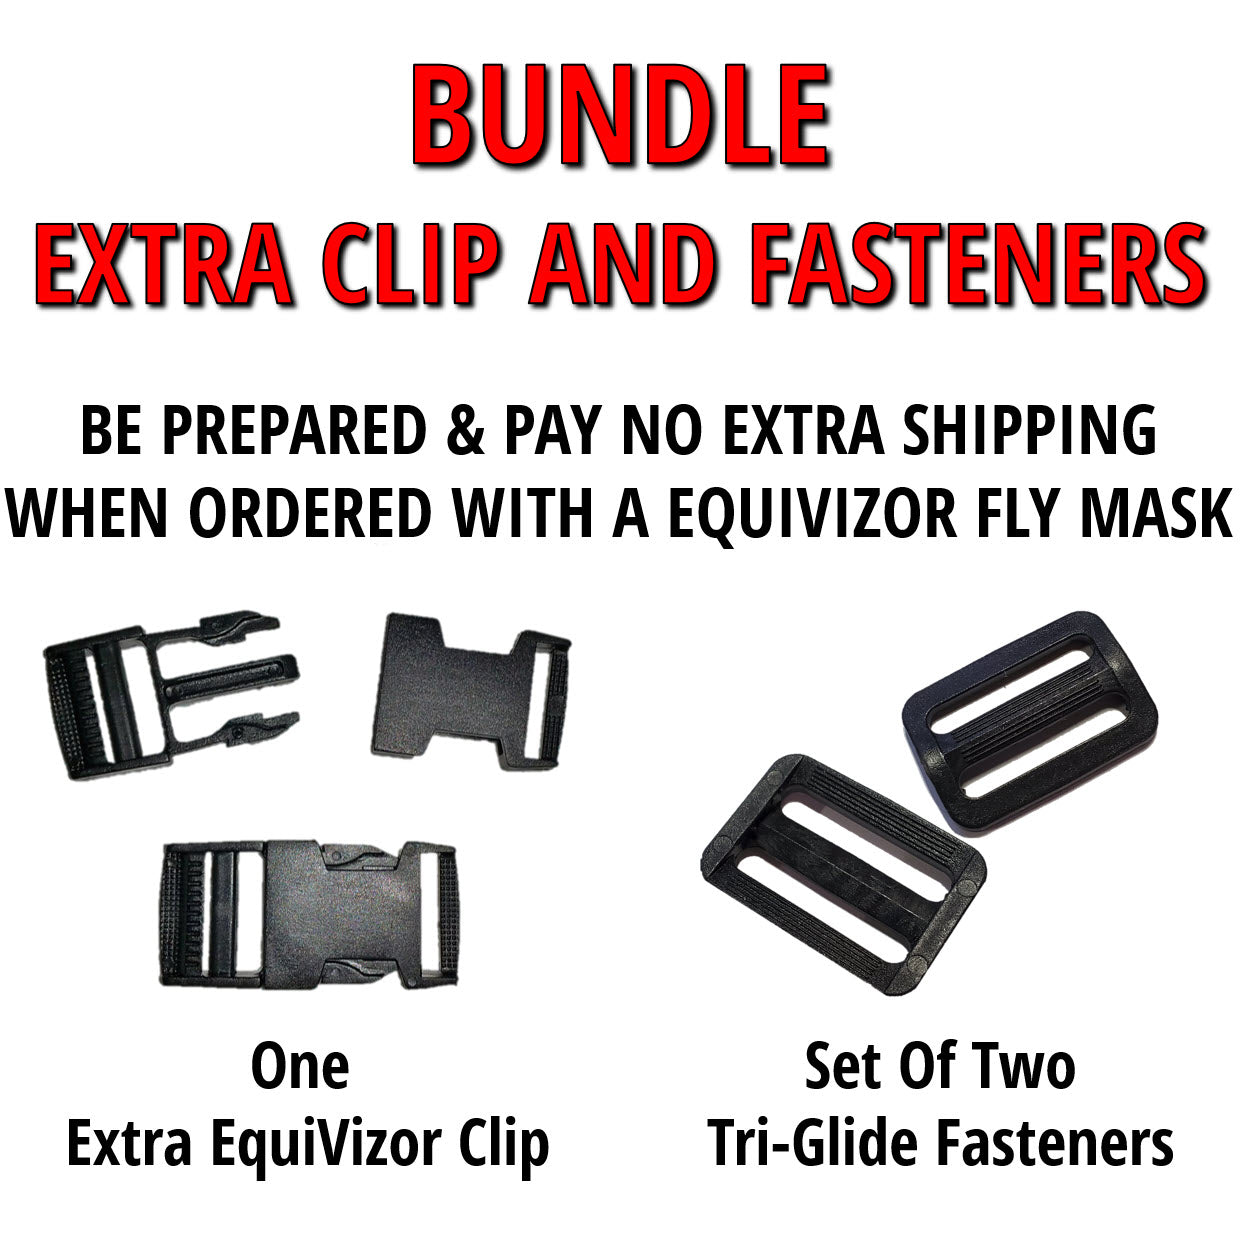 BUNDLE - EquiVizor Clip and Fasteners